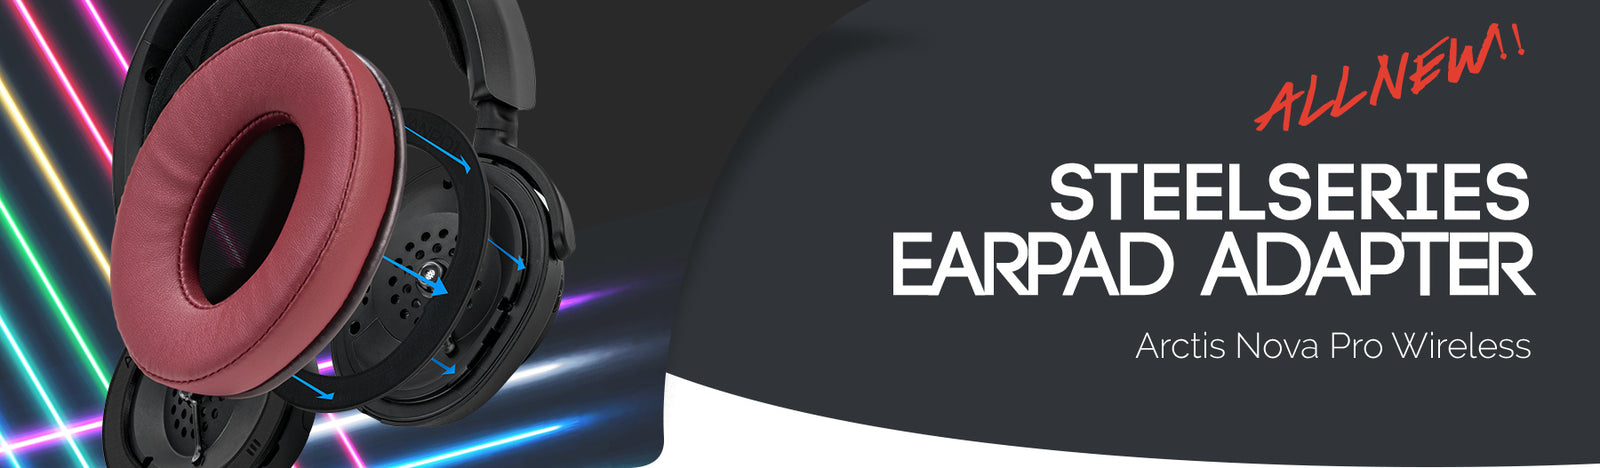 Earpad Adapter Ring For Corsair Virtuoso RGB Wireless Gaming Headset - -  Brainwavz Audio